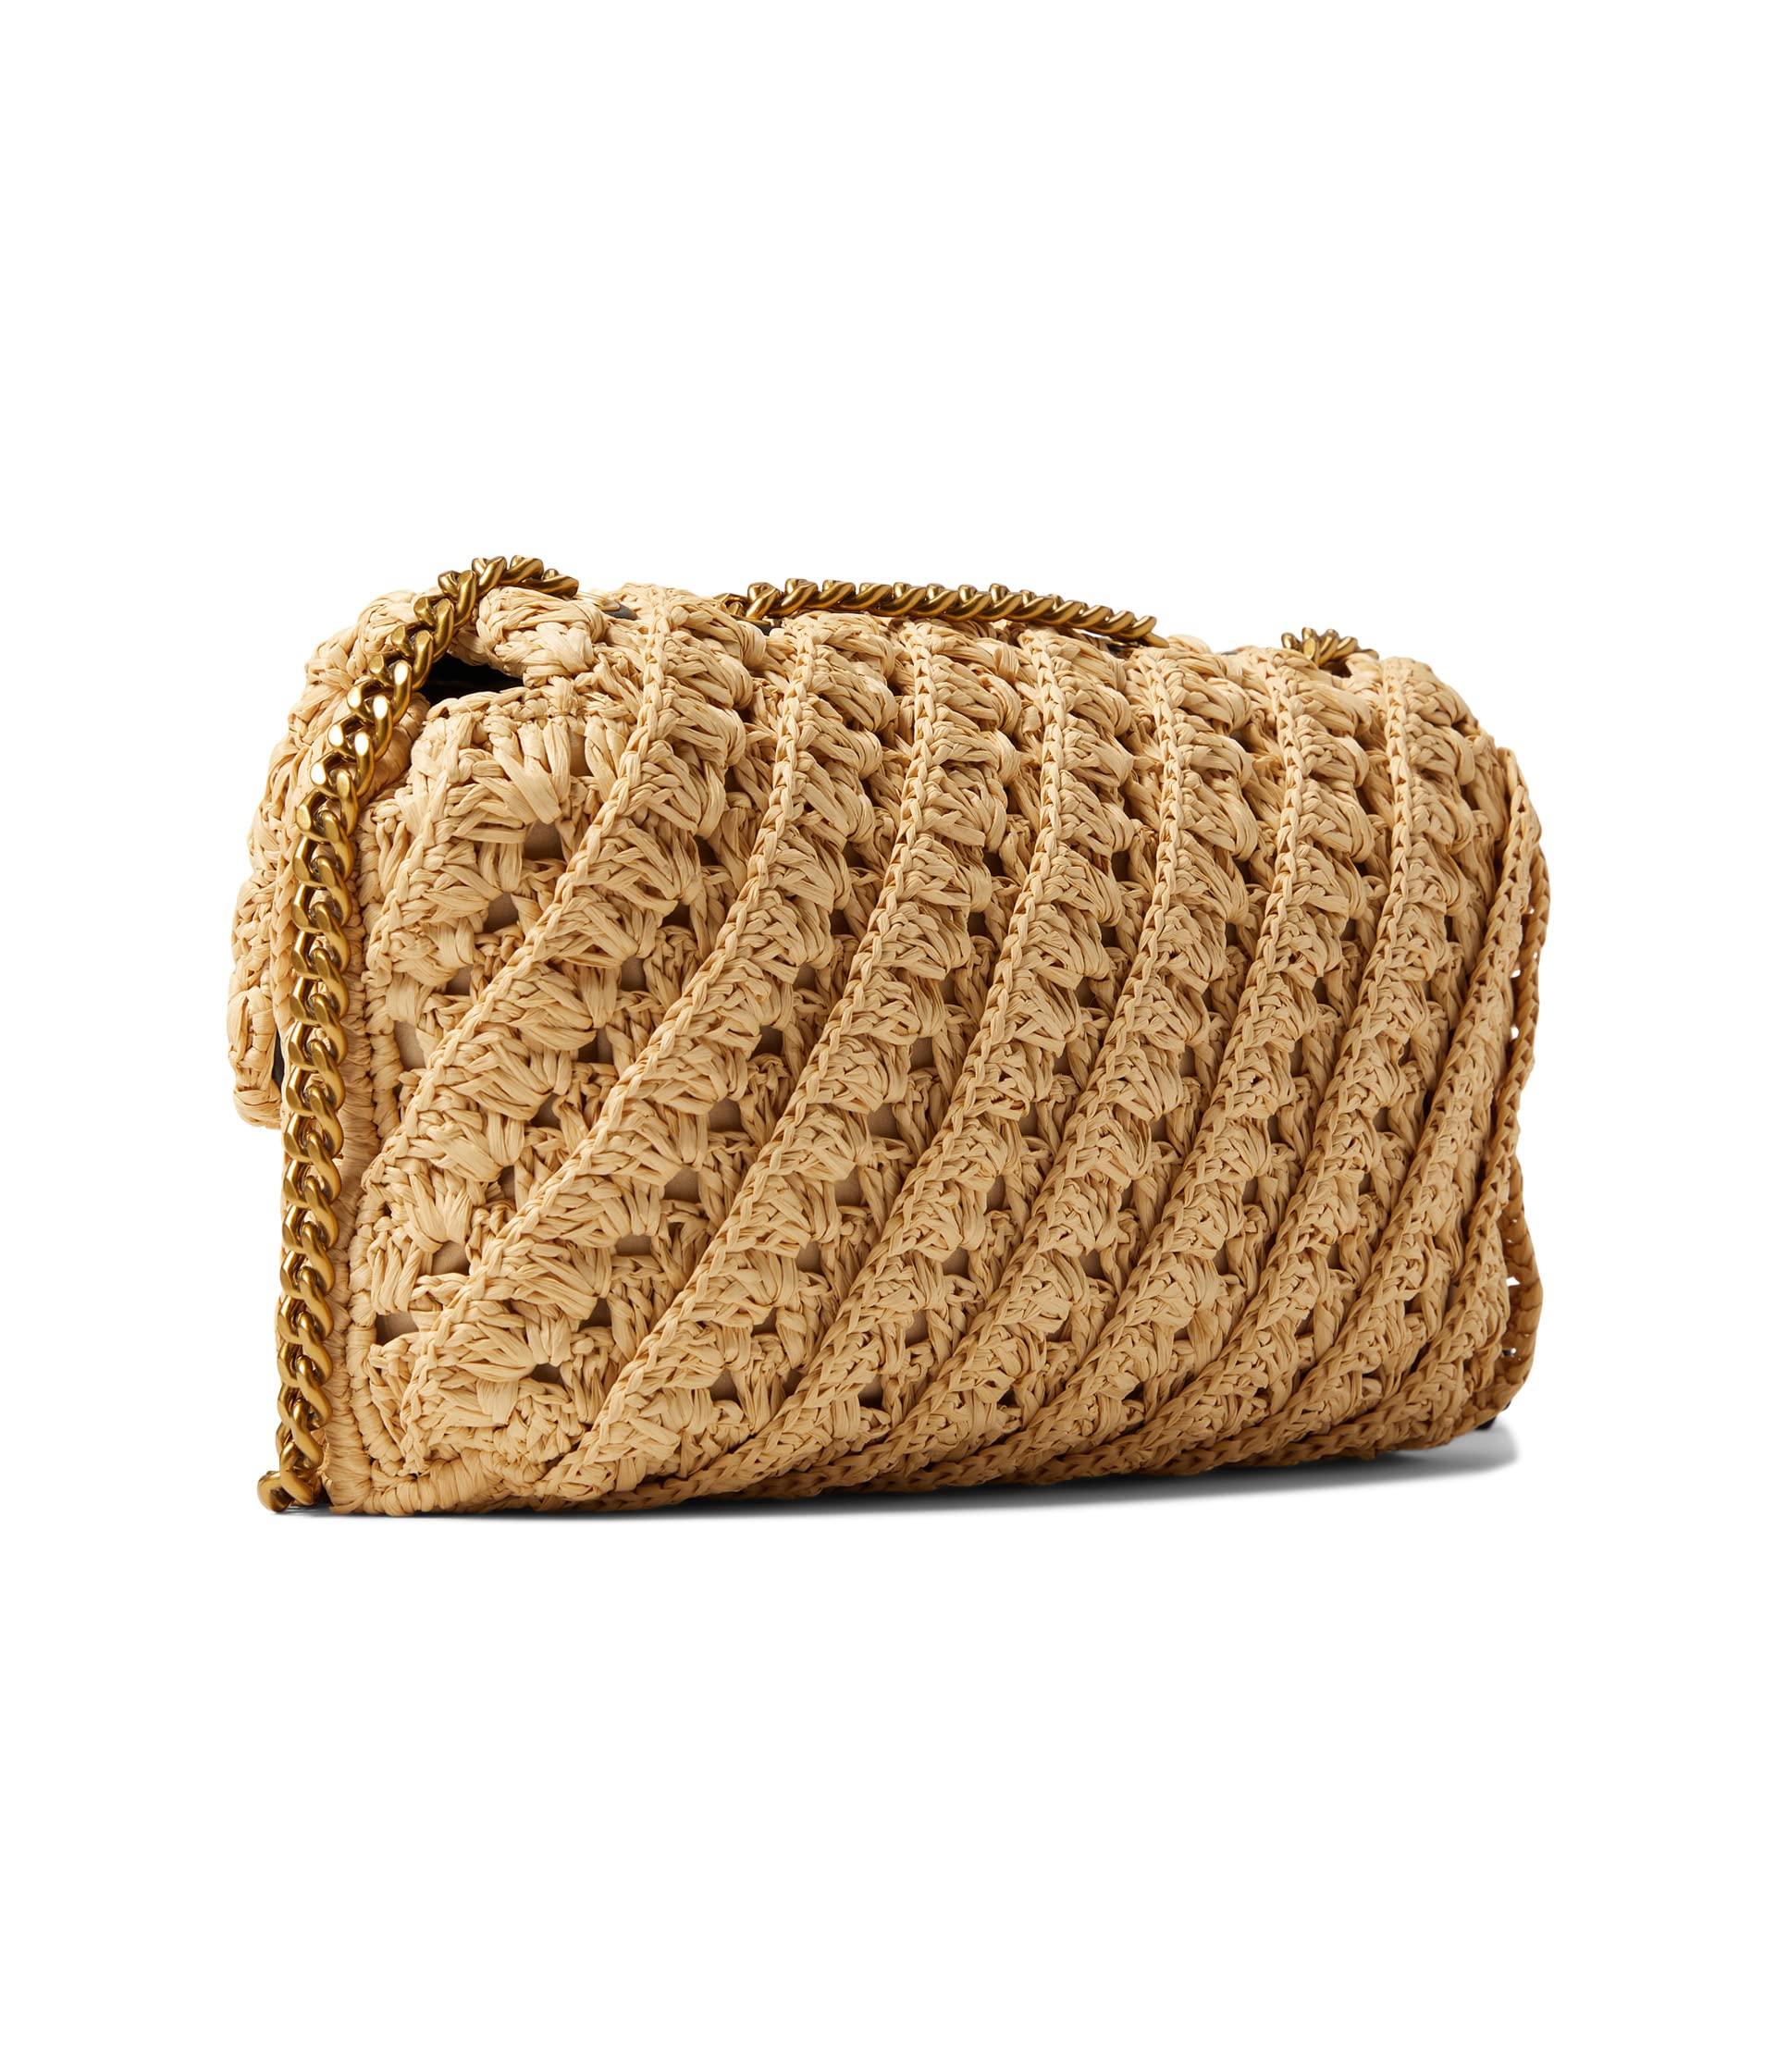 Tory Burch Kira Crochet Small Convertible Shoulder Bag in Natural | Lyst